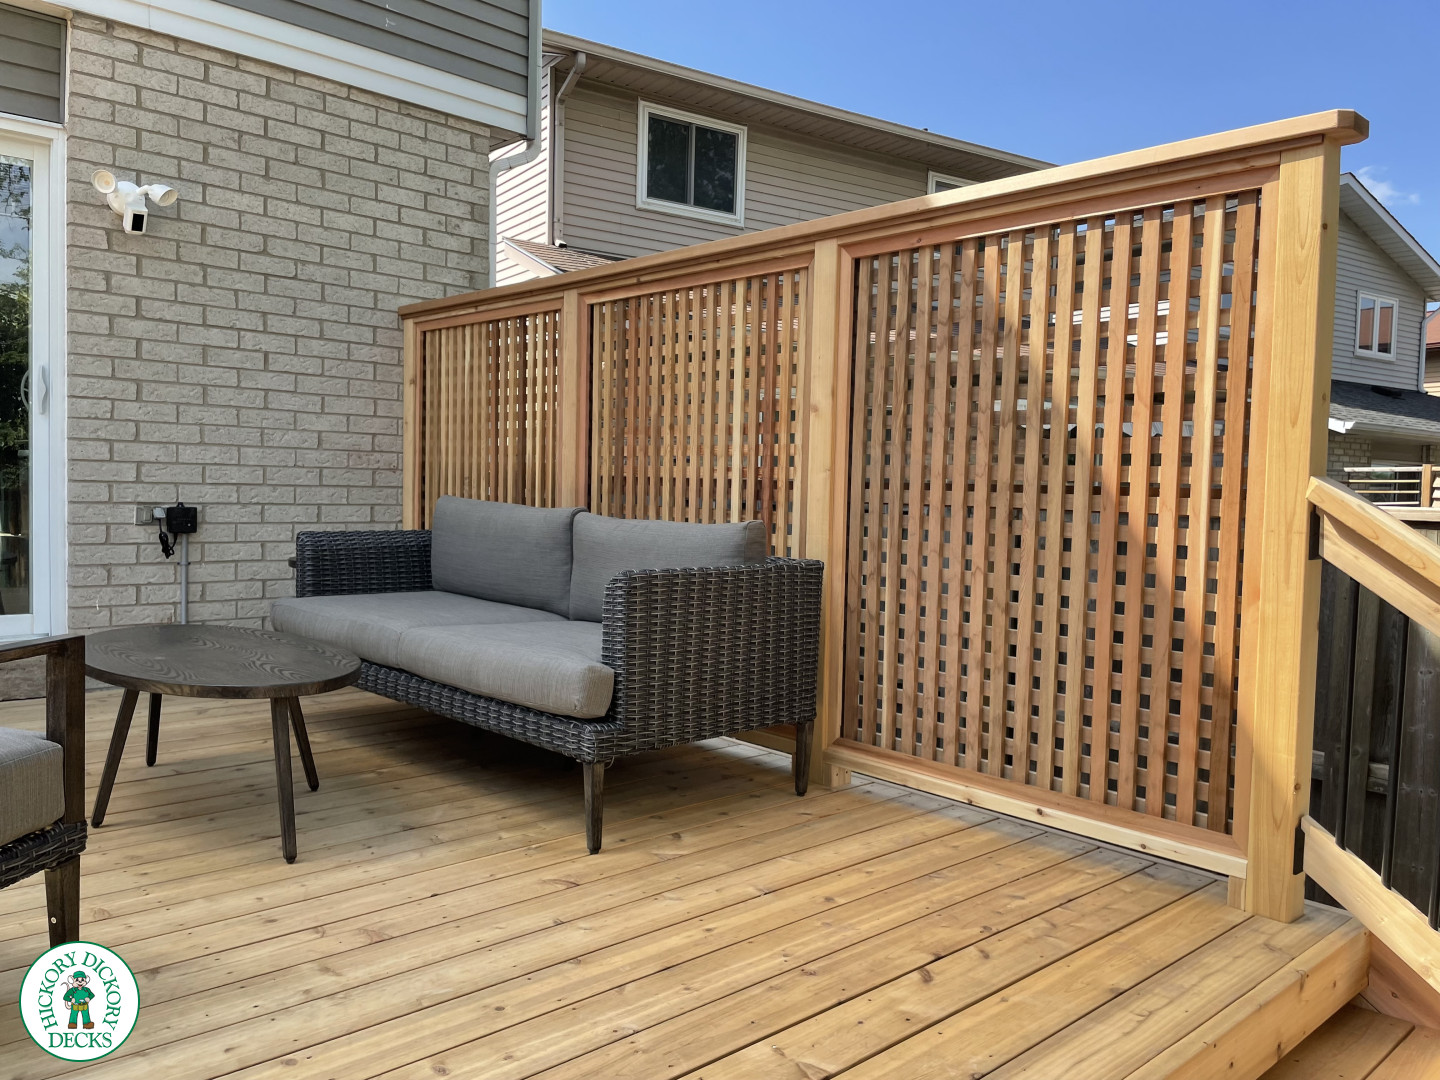 Cedar deck with four steps, cedar pickey railing, and a cedar privacy screen.